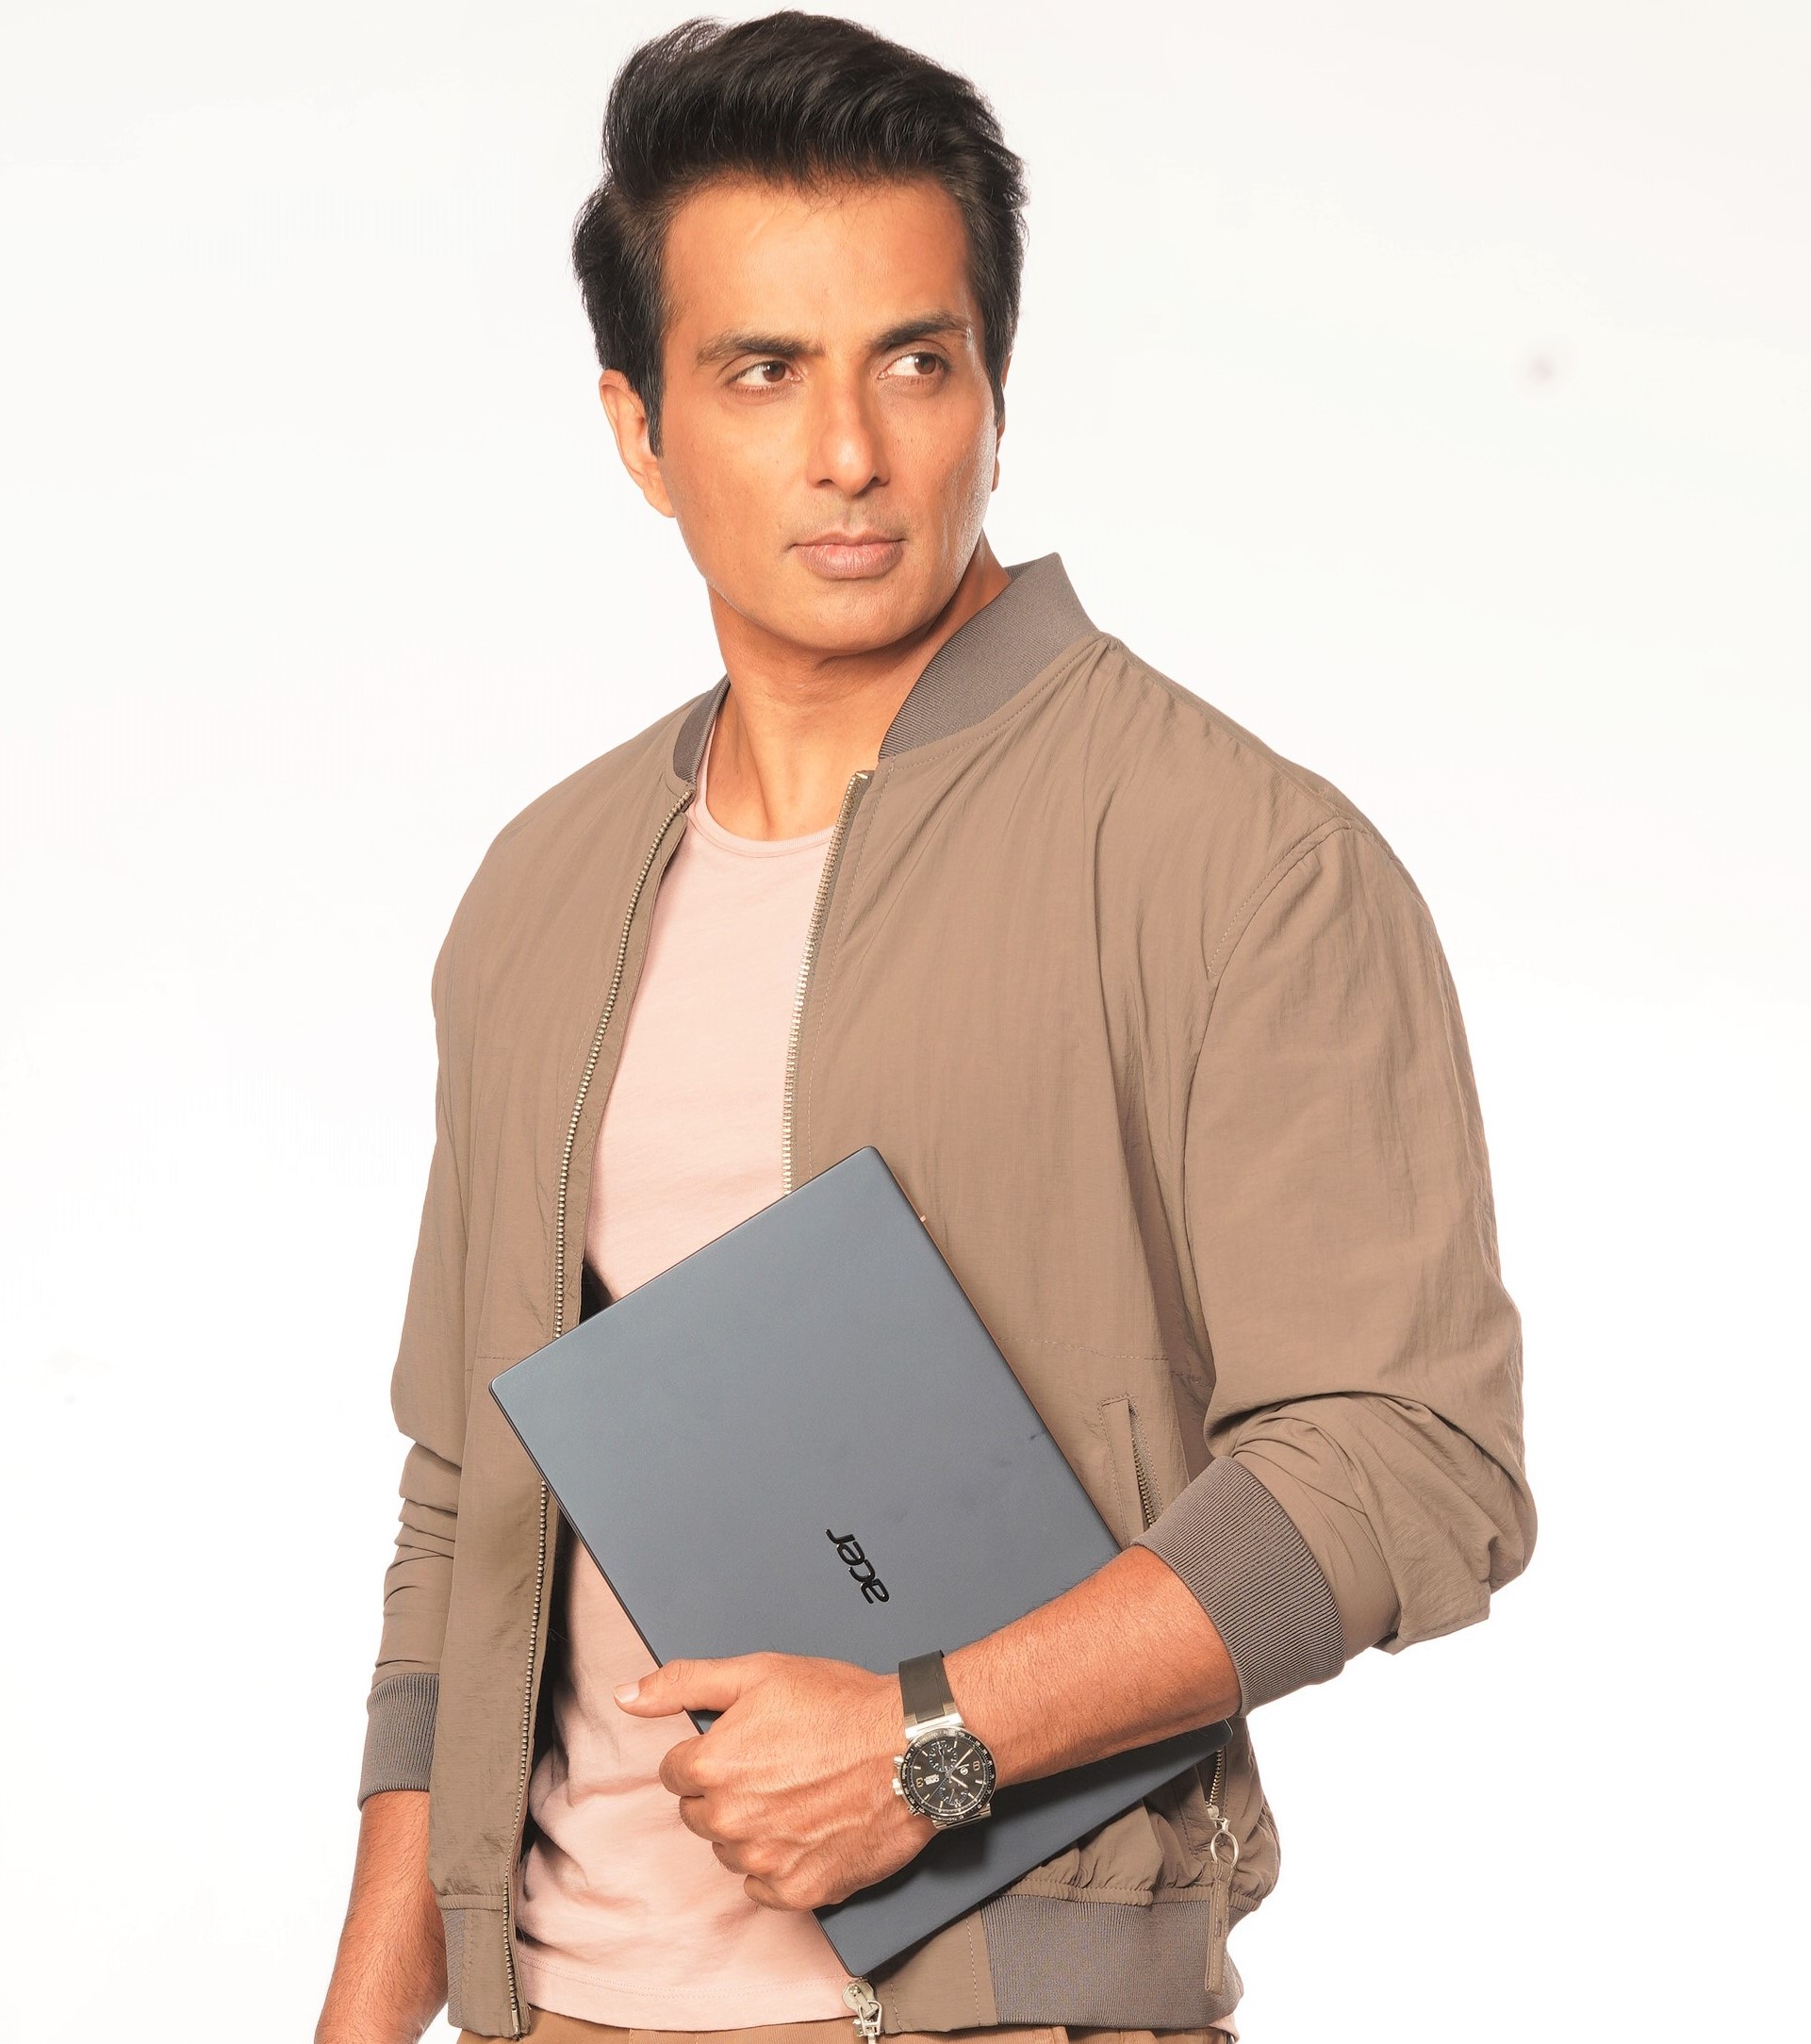 Acer India Signs Sonu Sood as Brand Ambassador